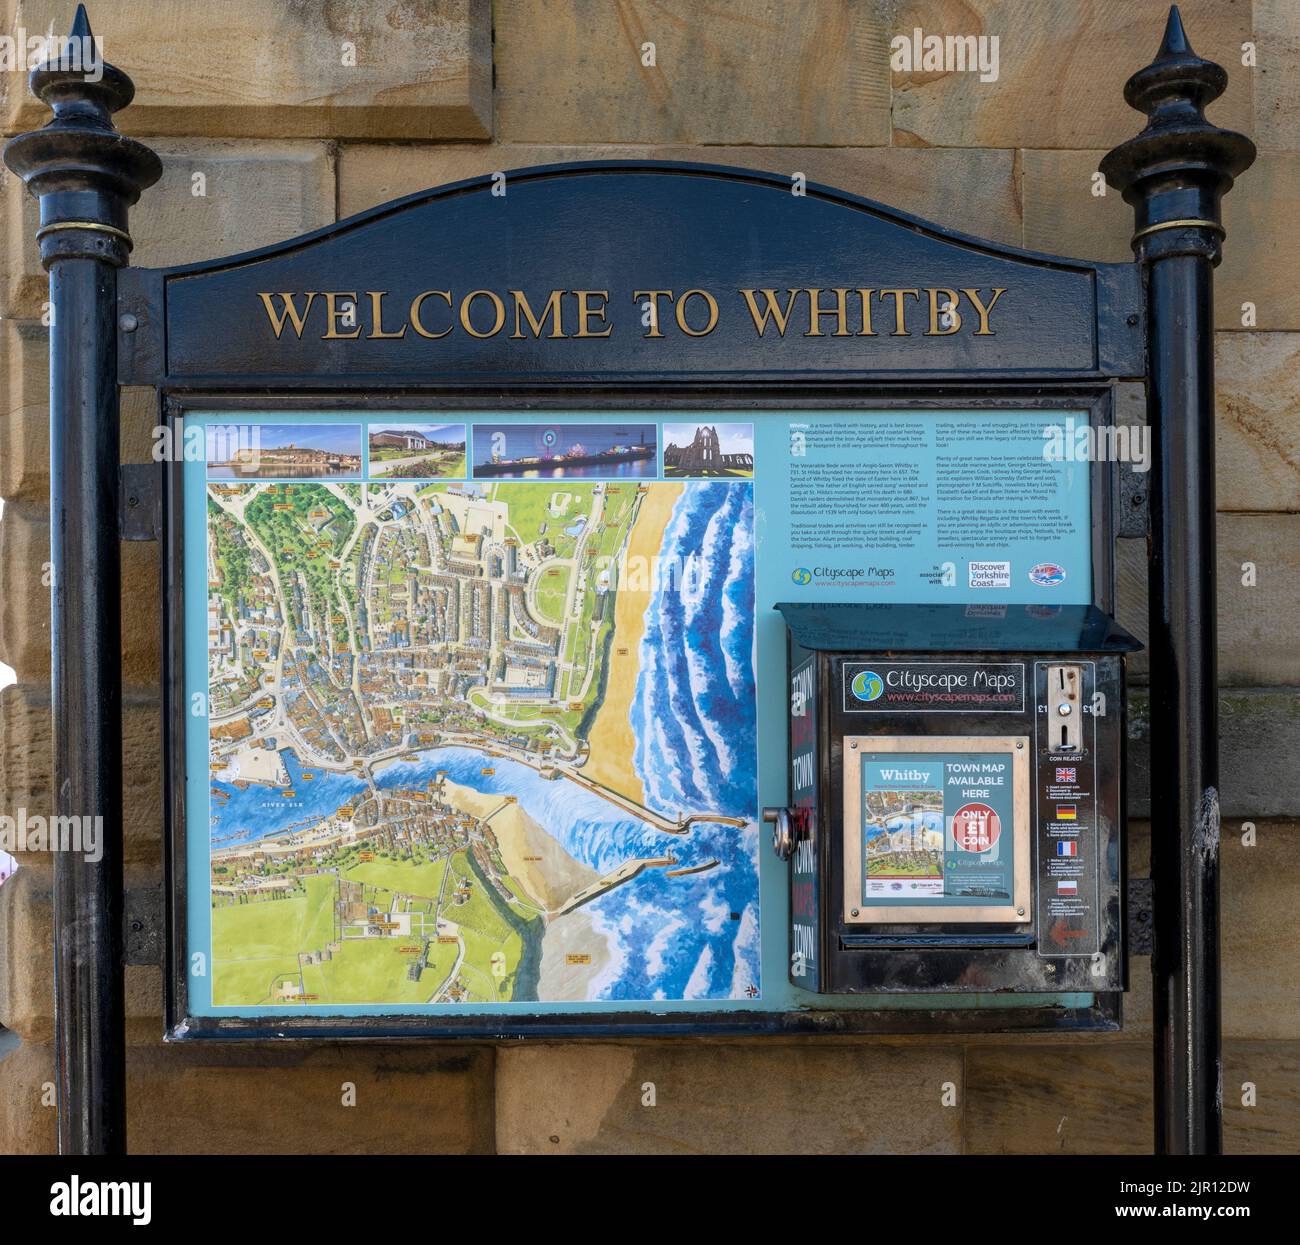 Bienvenido a Whitby Tourist Information Board, Whitby, North Yorkshire, Yorkshire, Inglaterra, REINO UNIDO Foto de stock